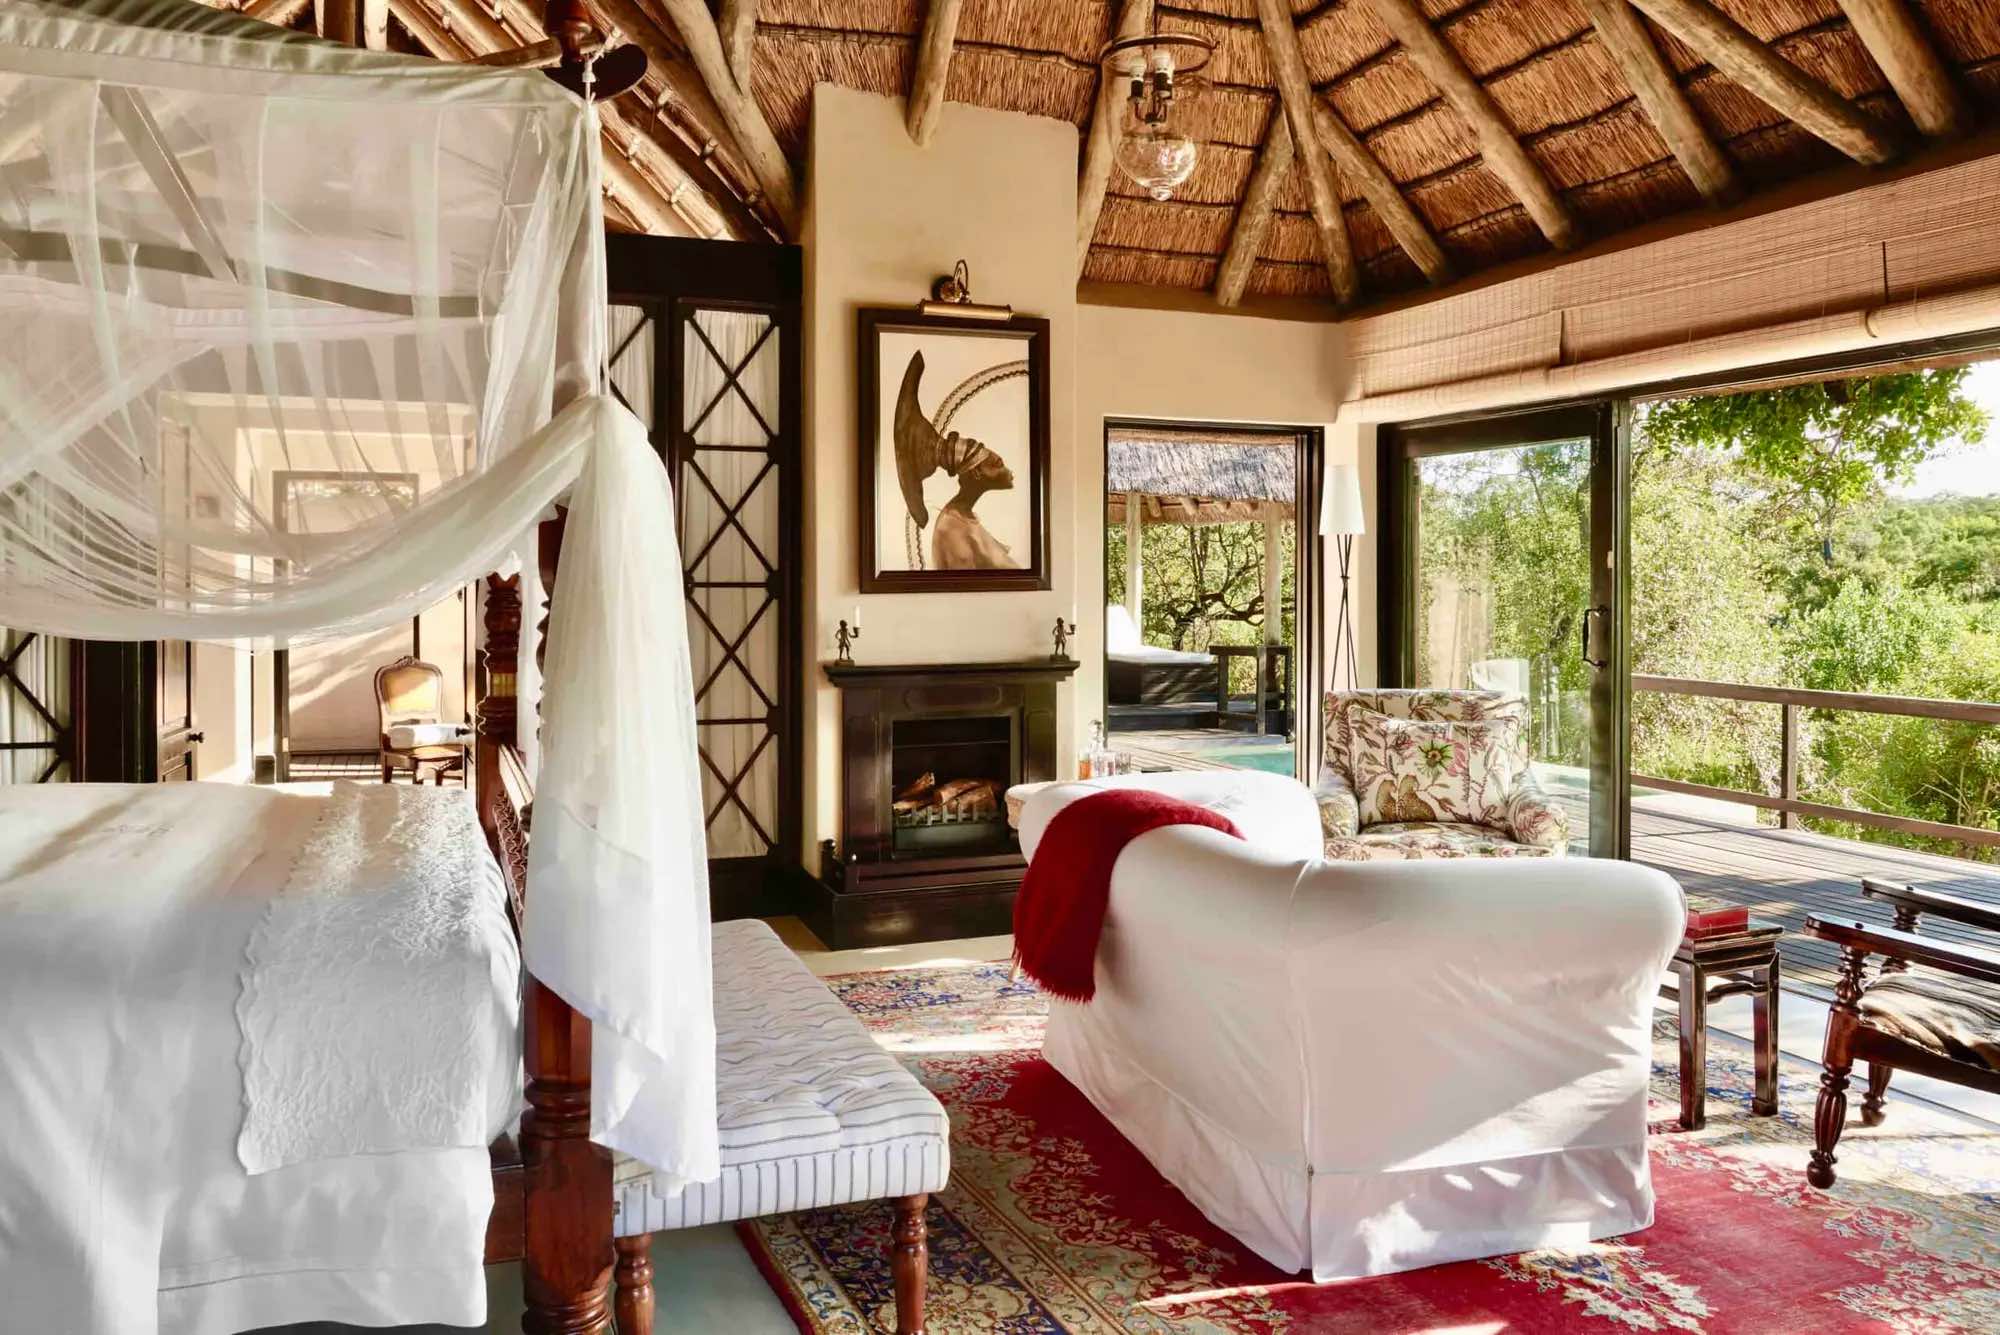 Safari luxury with signature design by South African hotelier Liz Biden